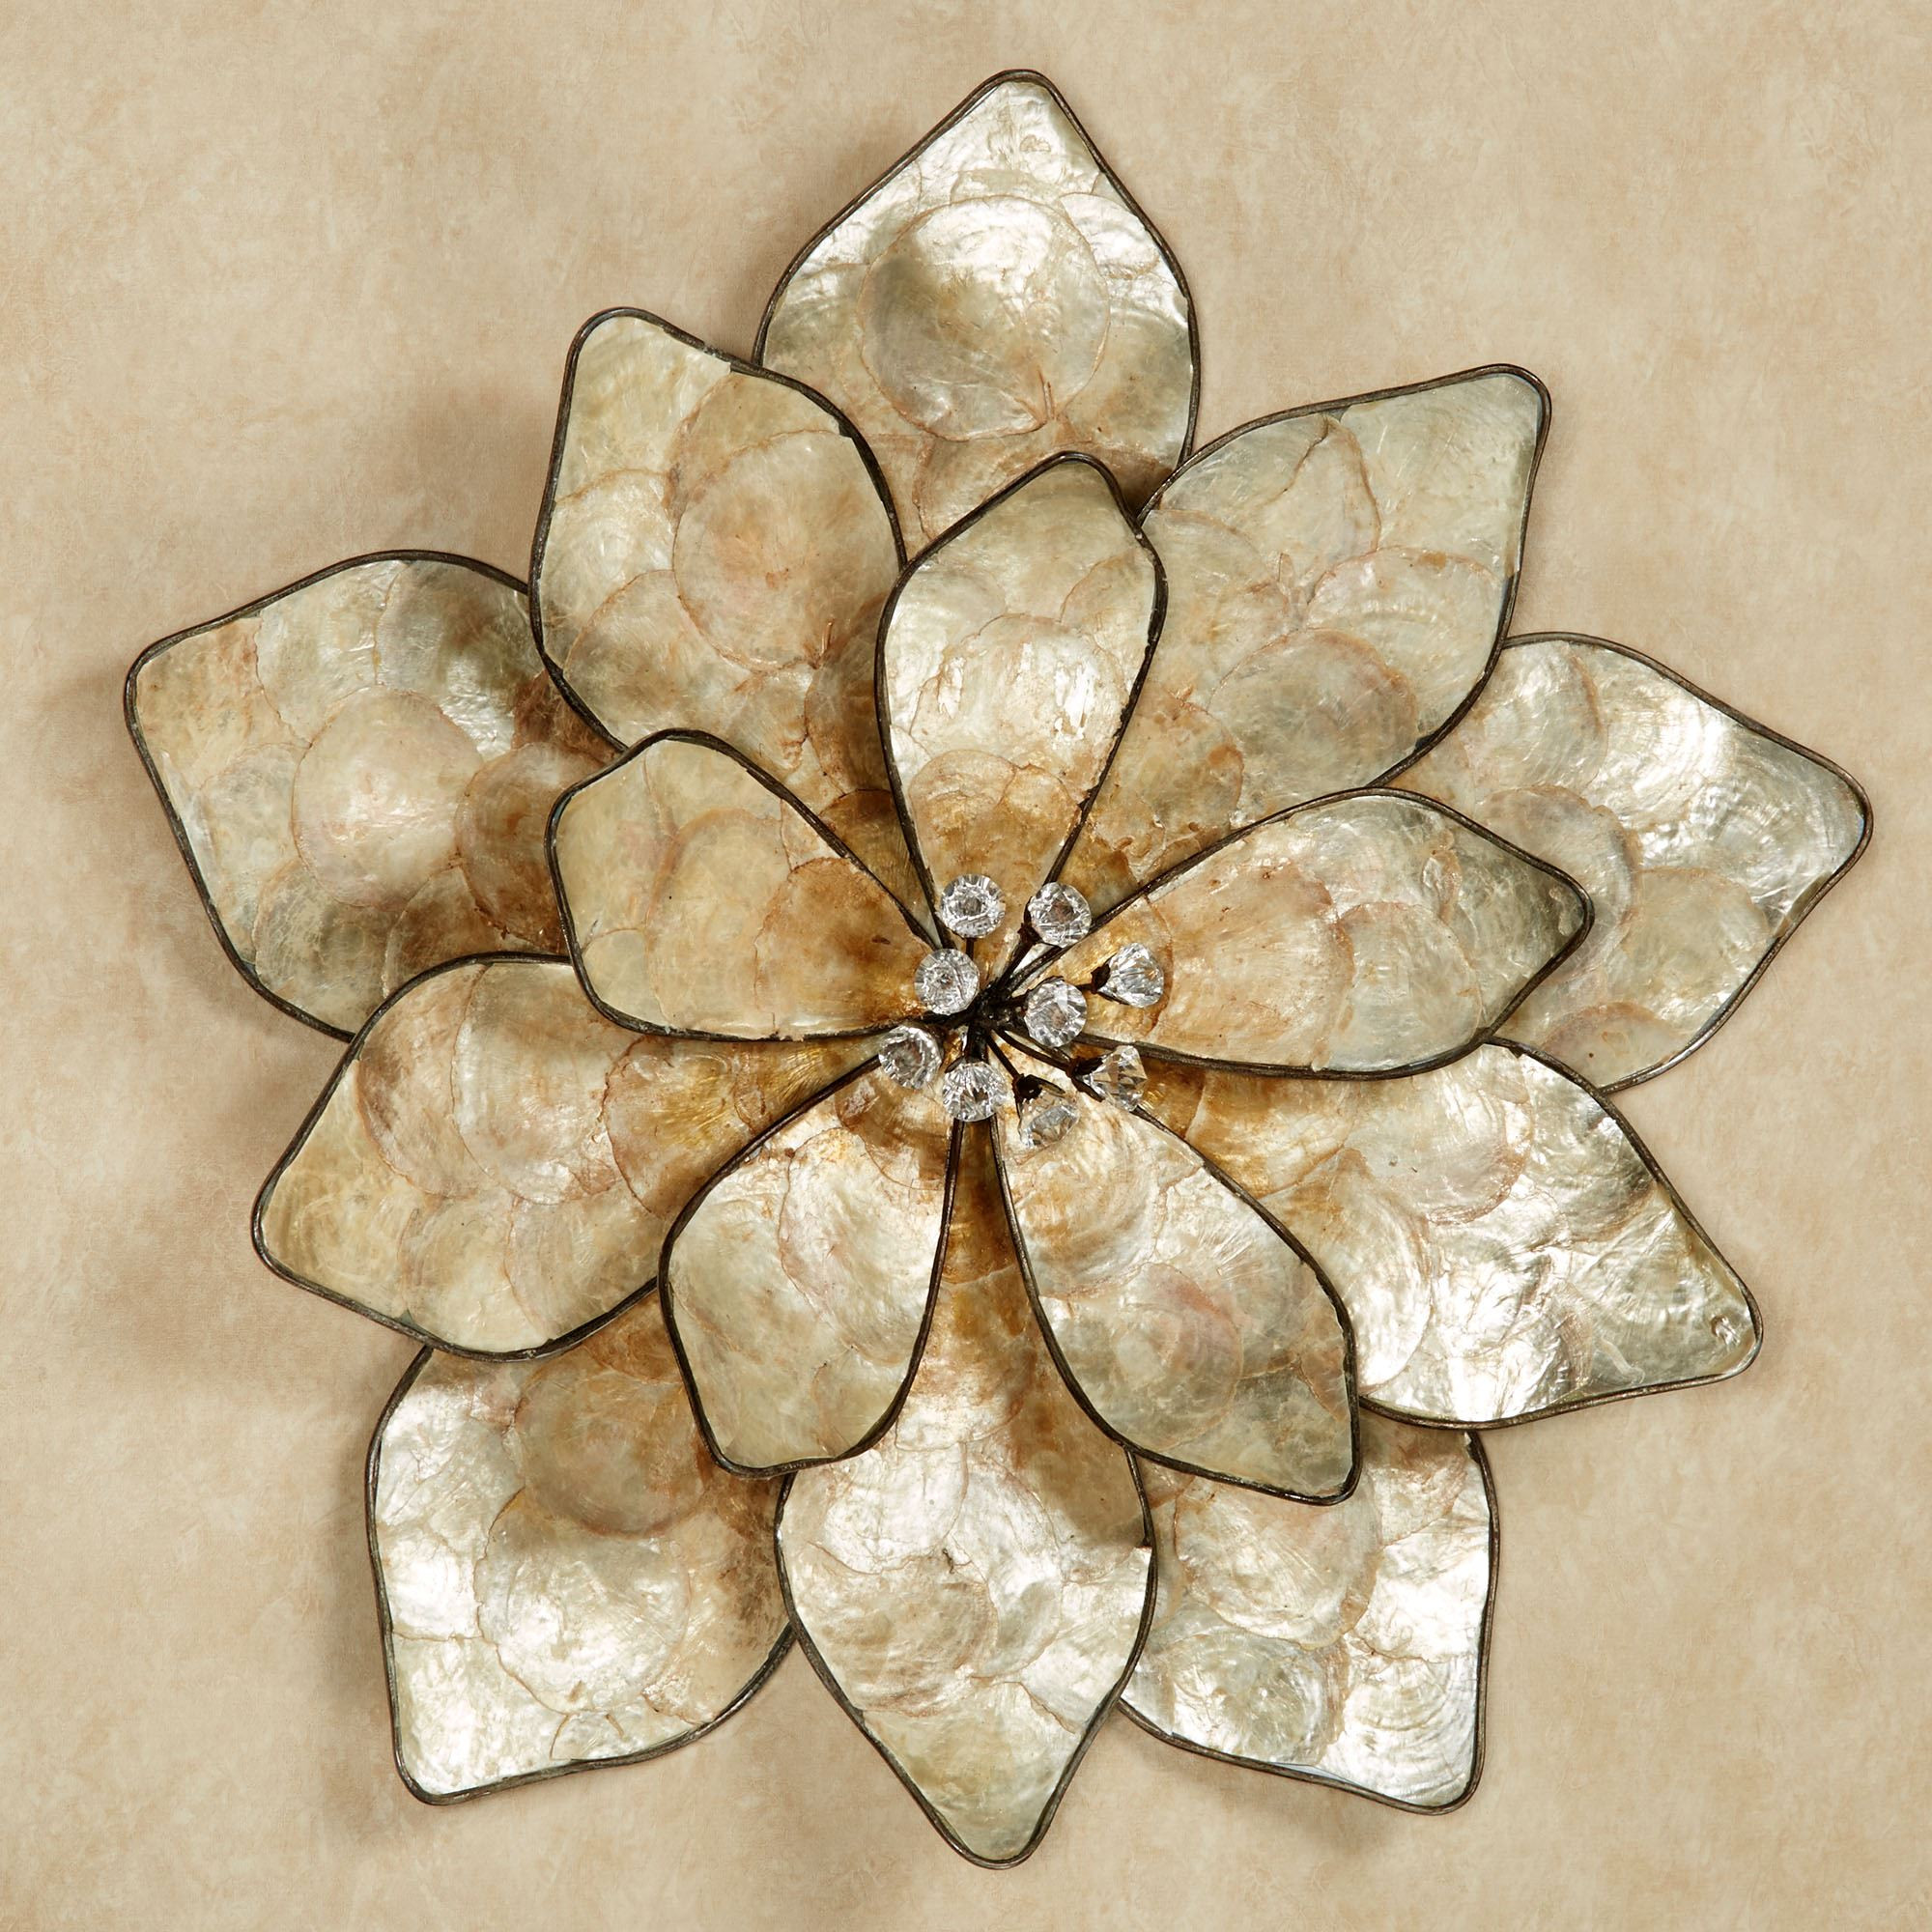 Best ideas about Flower Wall Art
. Save or Pin Eloquence Bloom Capiz Shell Flower Wall Art Now.